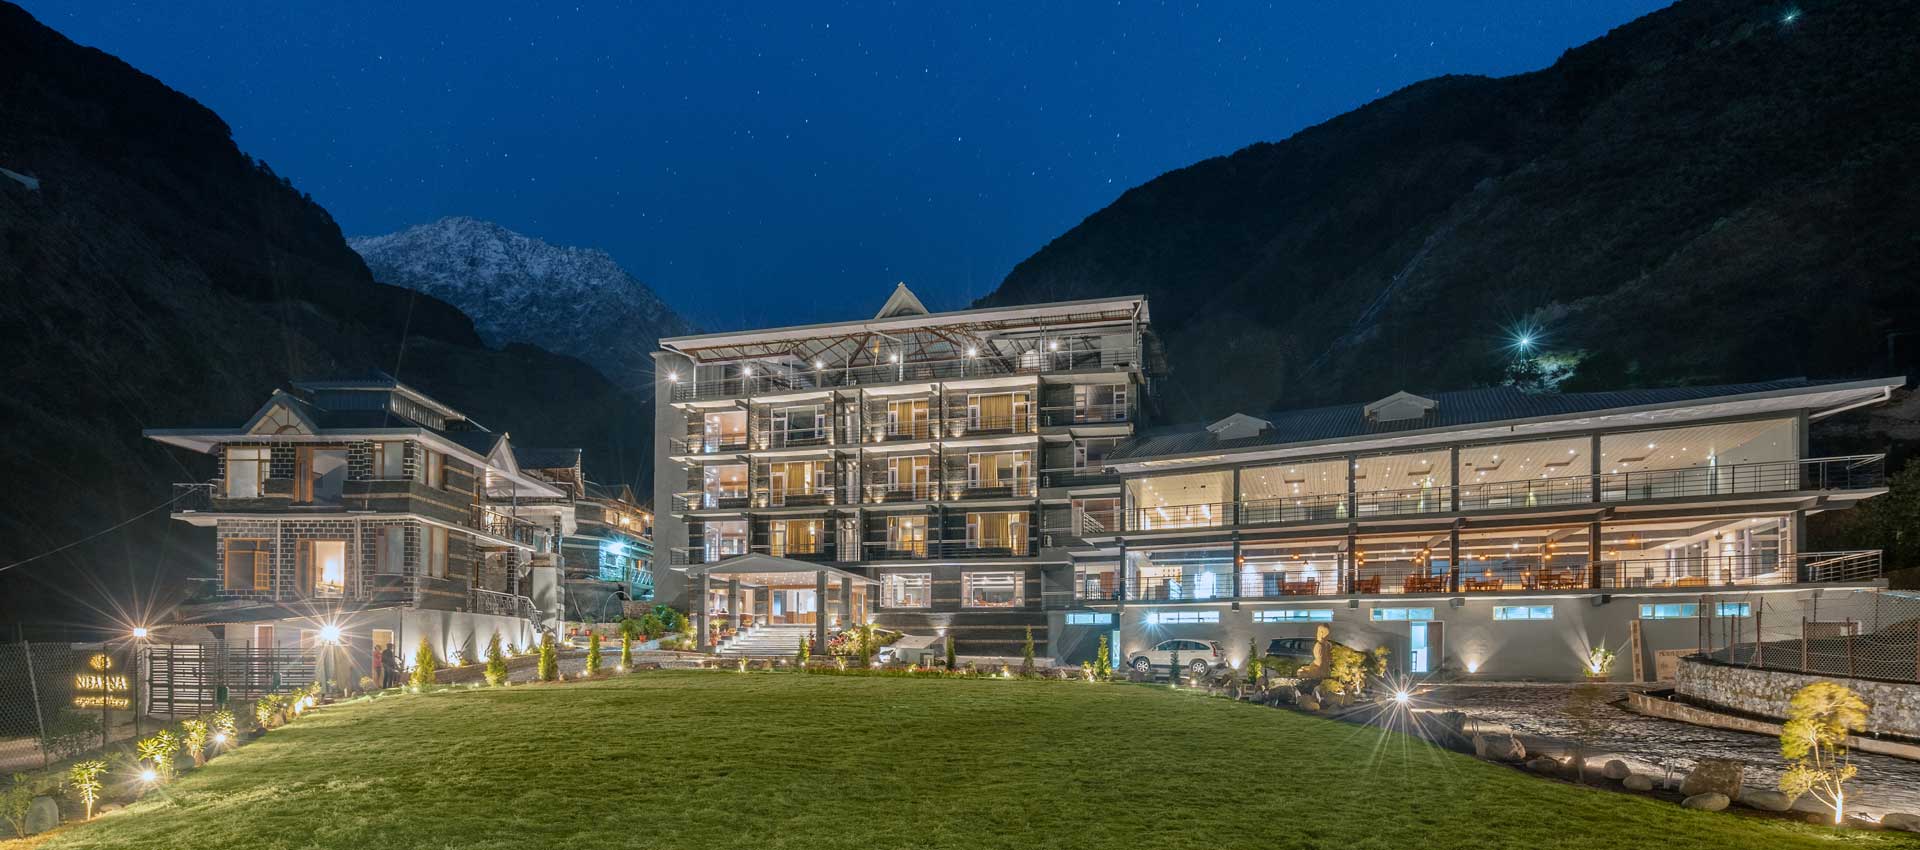 himachal pradesh tourism hotel in dharamshala